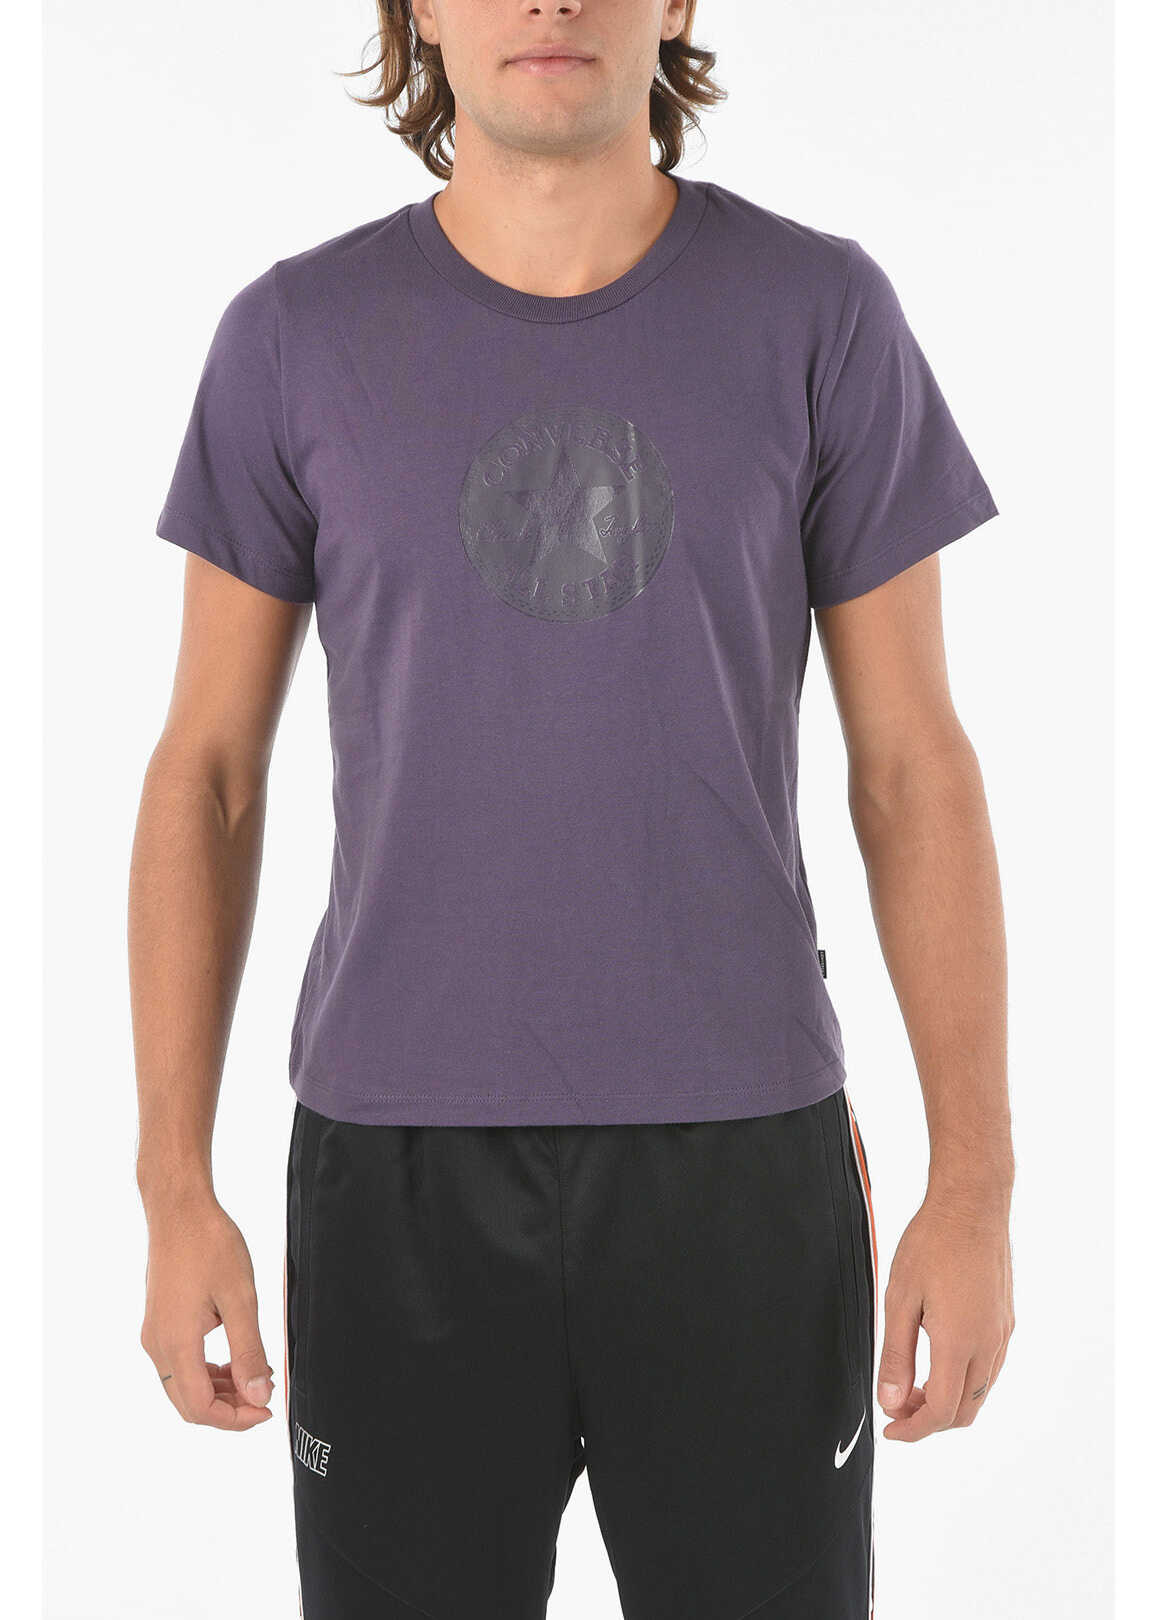 Converse All Star Chuck Taylor Logo-Printed T-Shirt Violet